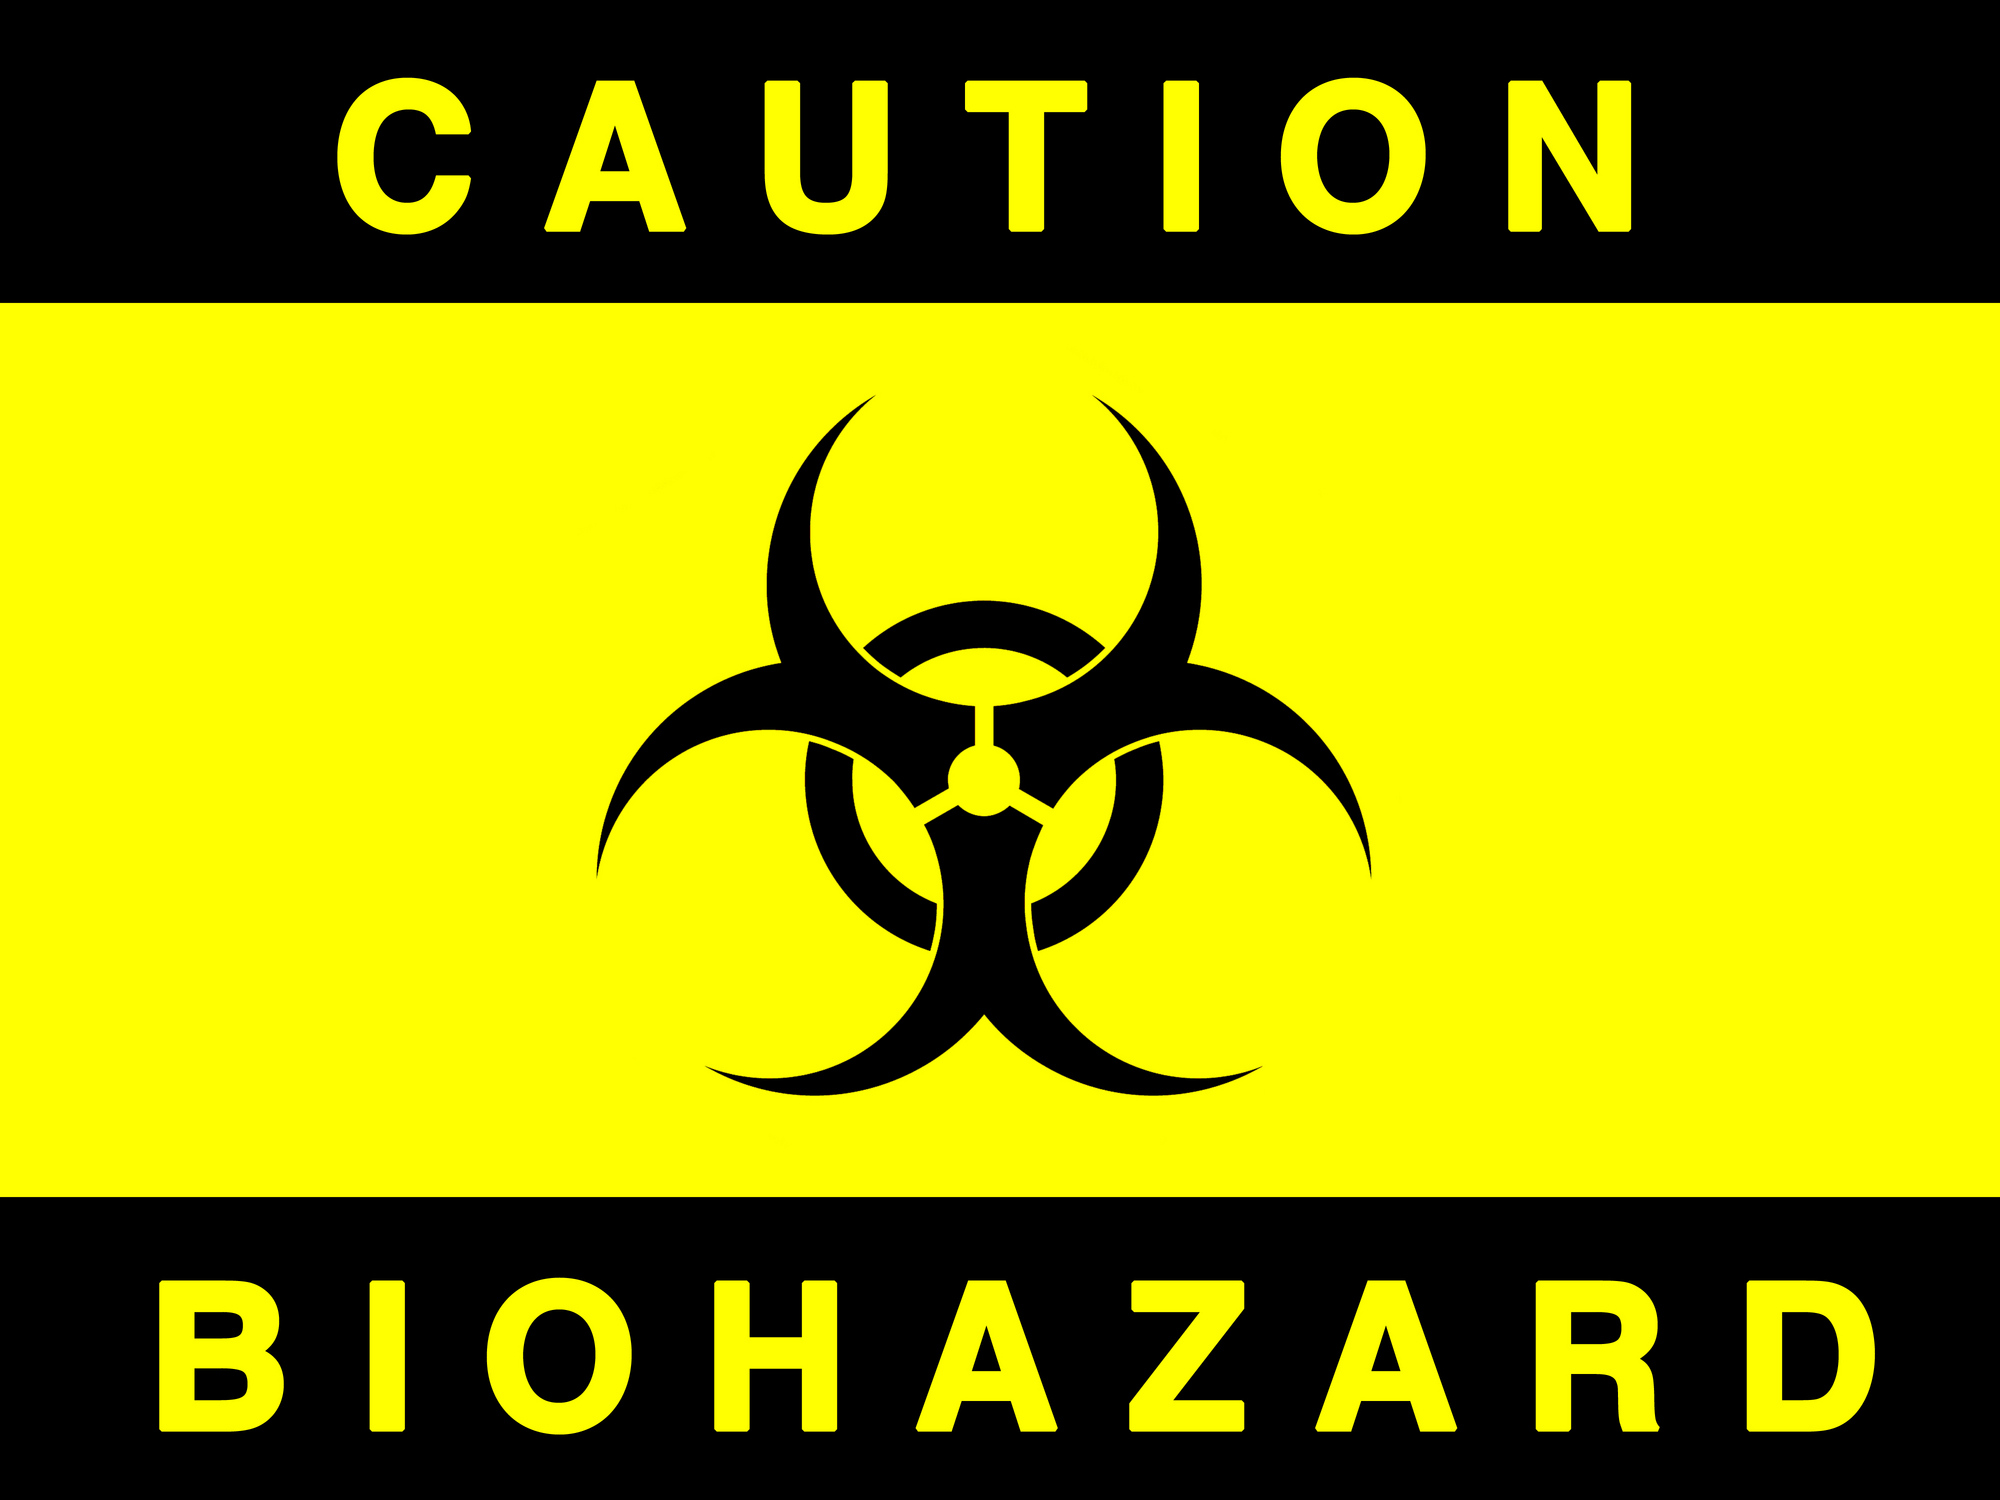 Free Biohazard Sign Printable Download Free Biohazard Sign Printable 